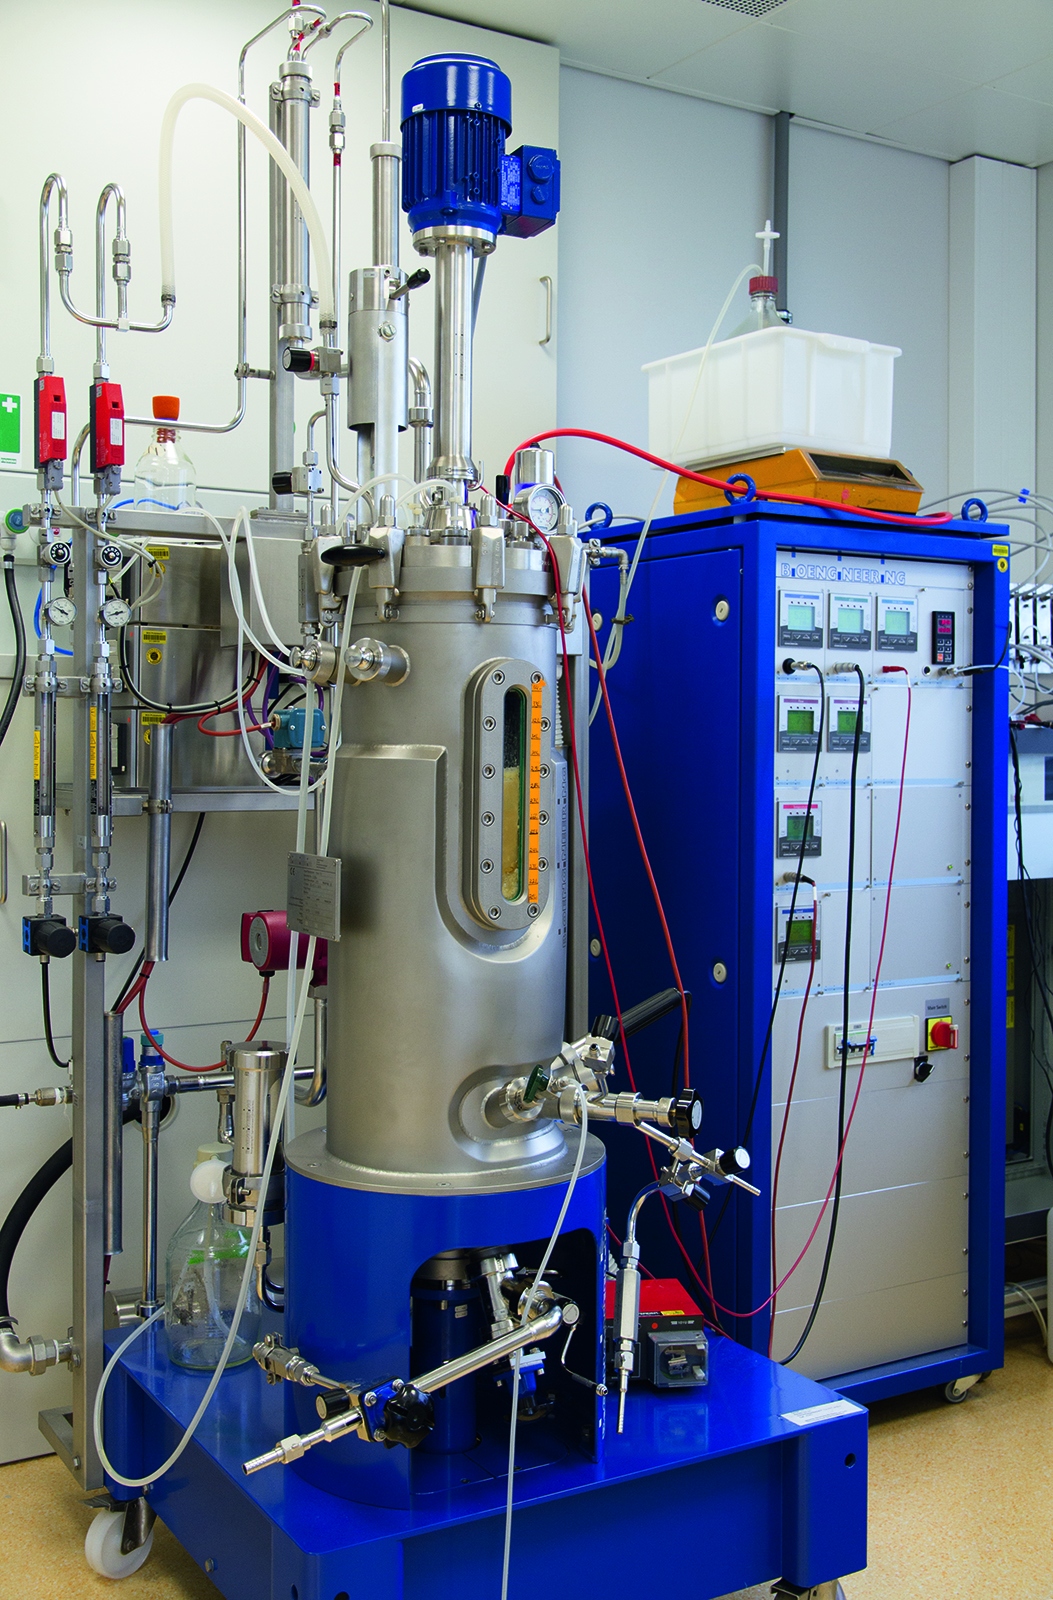 Fermentation of Candida in a 42 litre bioreactor.